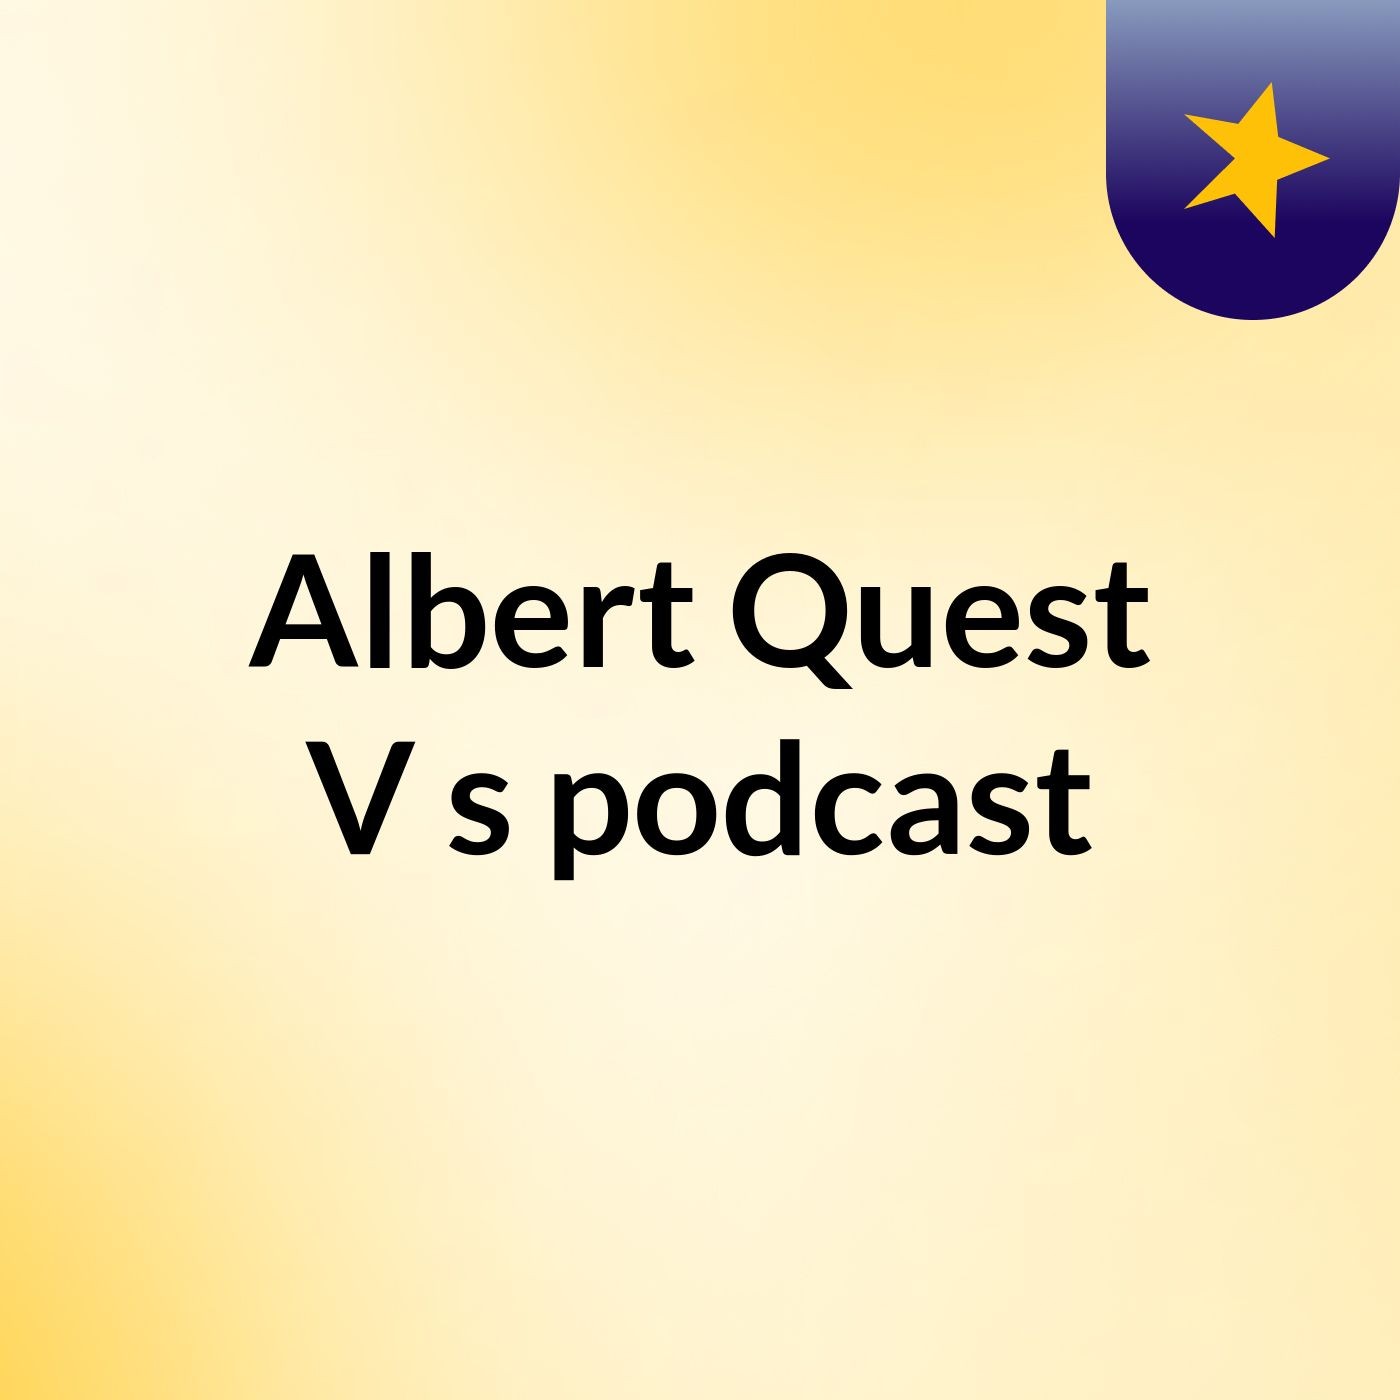 kanye - Albert Quest V's podcast